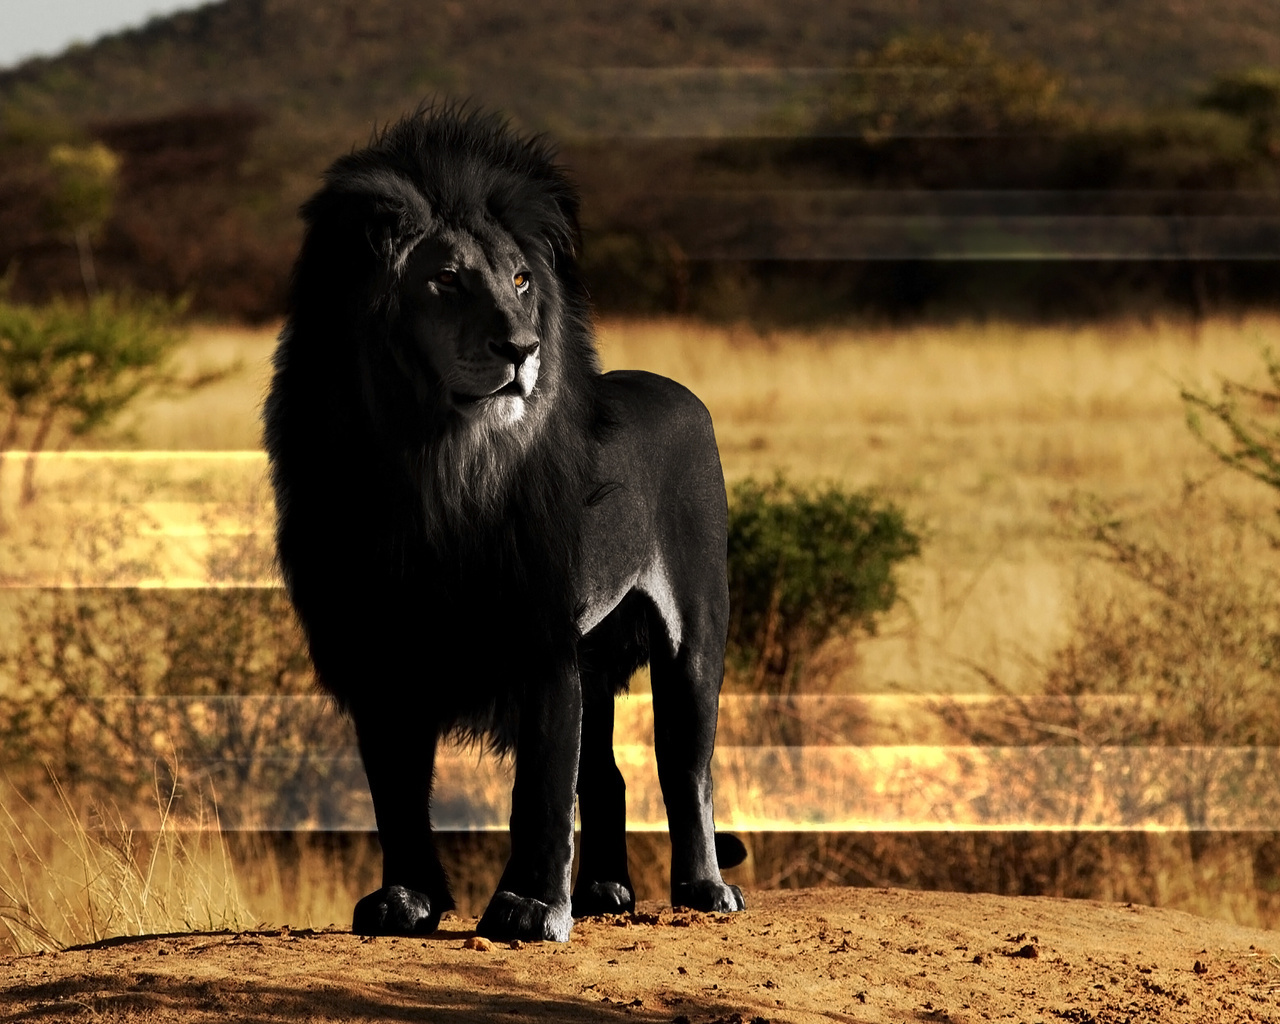 lions, art, animals lock screen backgrounds